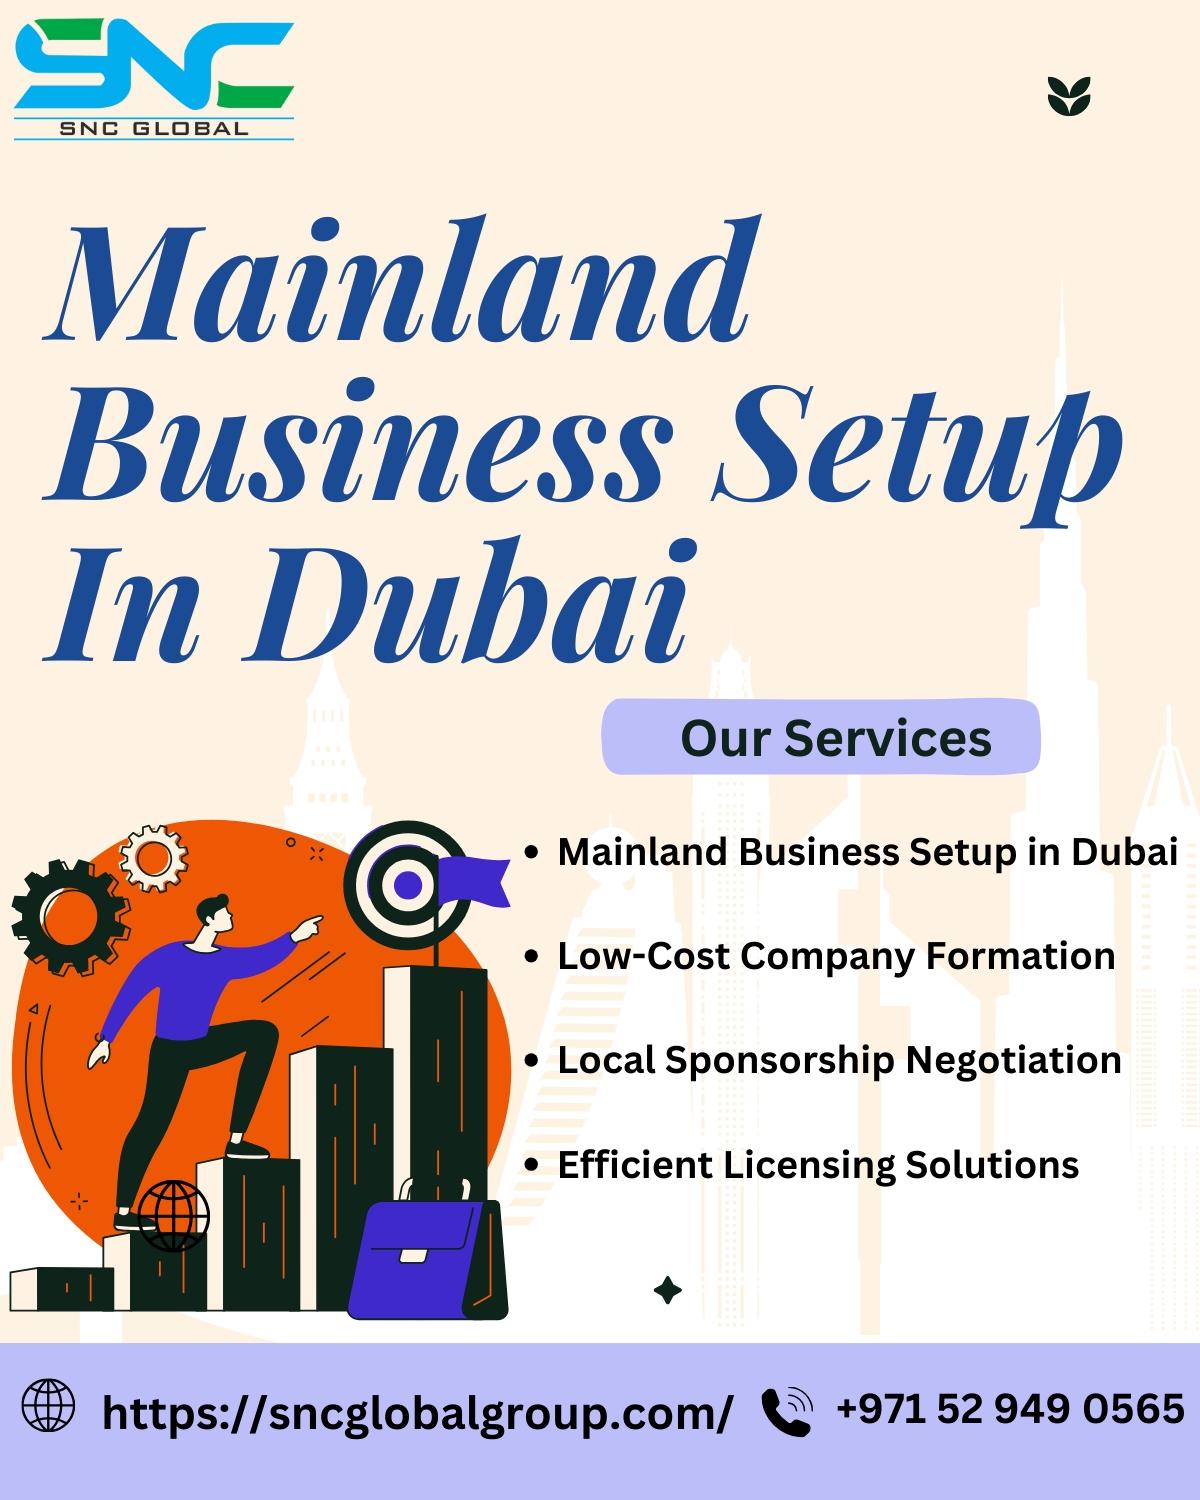 Mainland business setup in Dubai